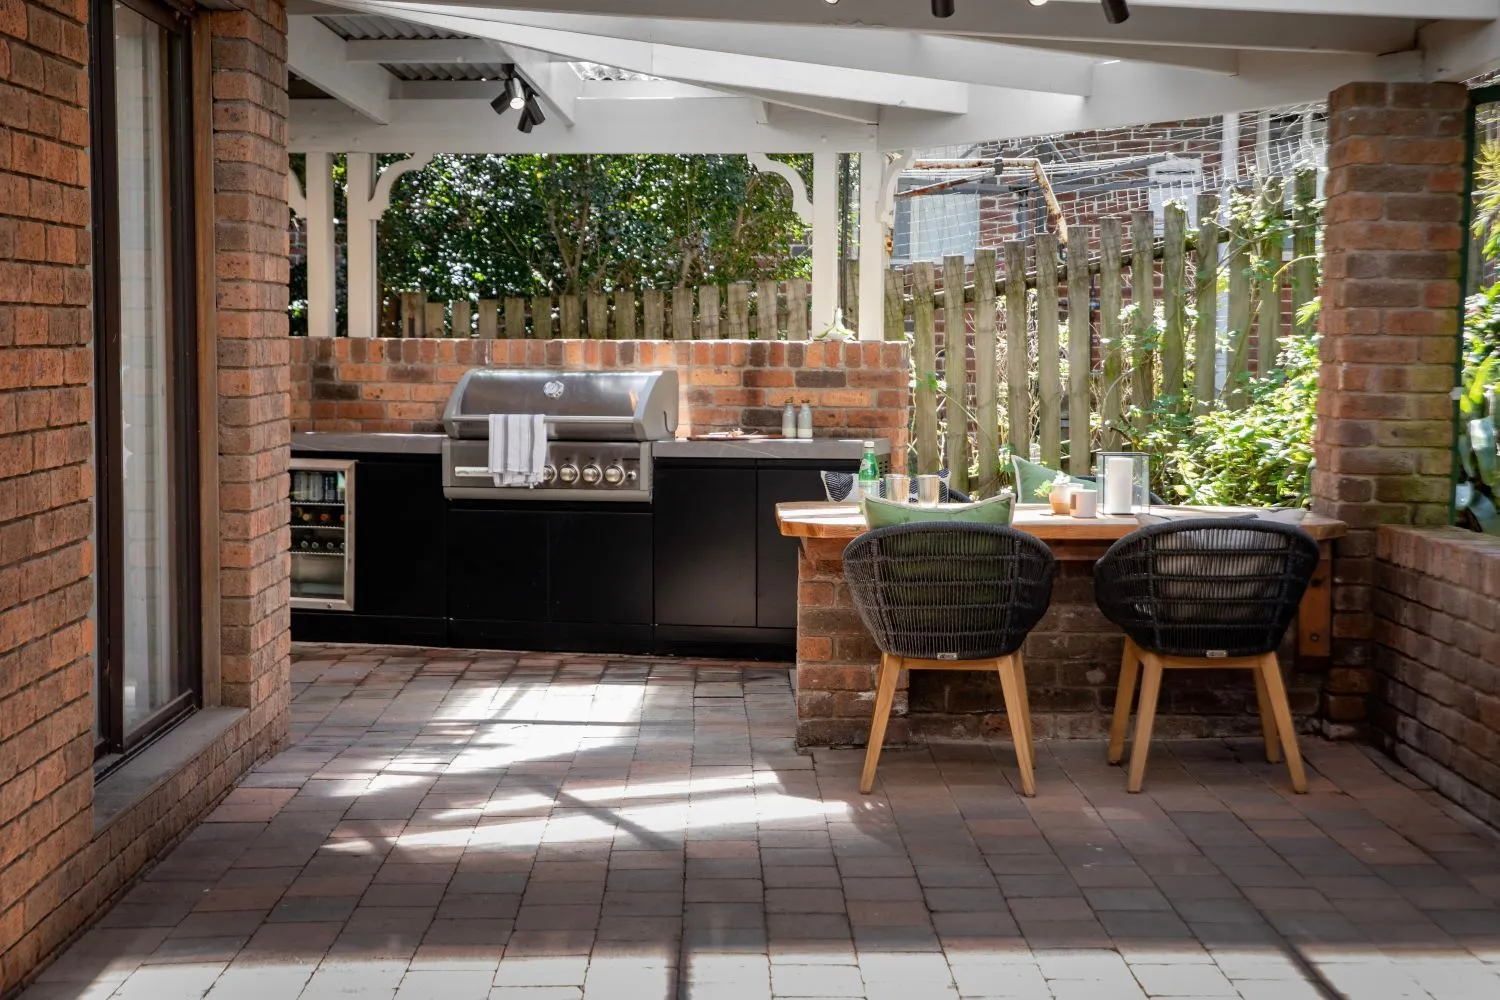 https://stylesourcebook.com.au/_ipx/w_1500,f_webp,q_80/https://stylesourcebook-images.s3-ap-southeast-2.amazonaws.com/media/designing-an-outdoor-kitchen-with-crossray-outdoor-brick-bbq-1696301525.jpg